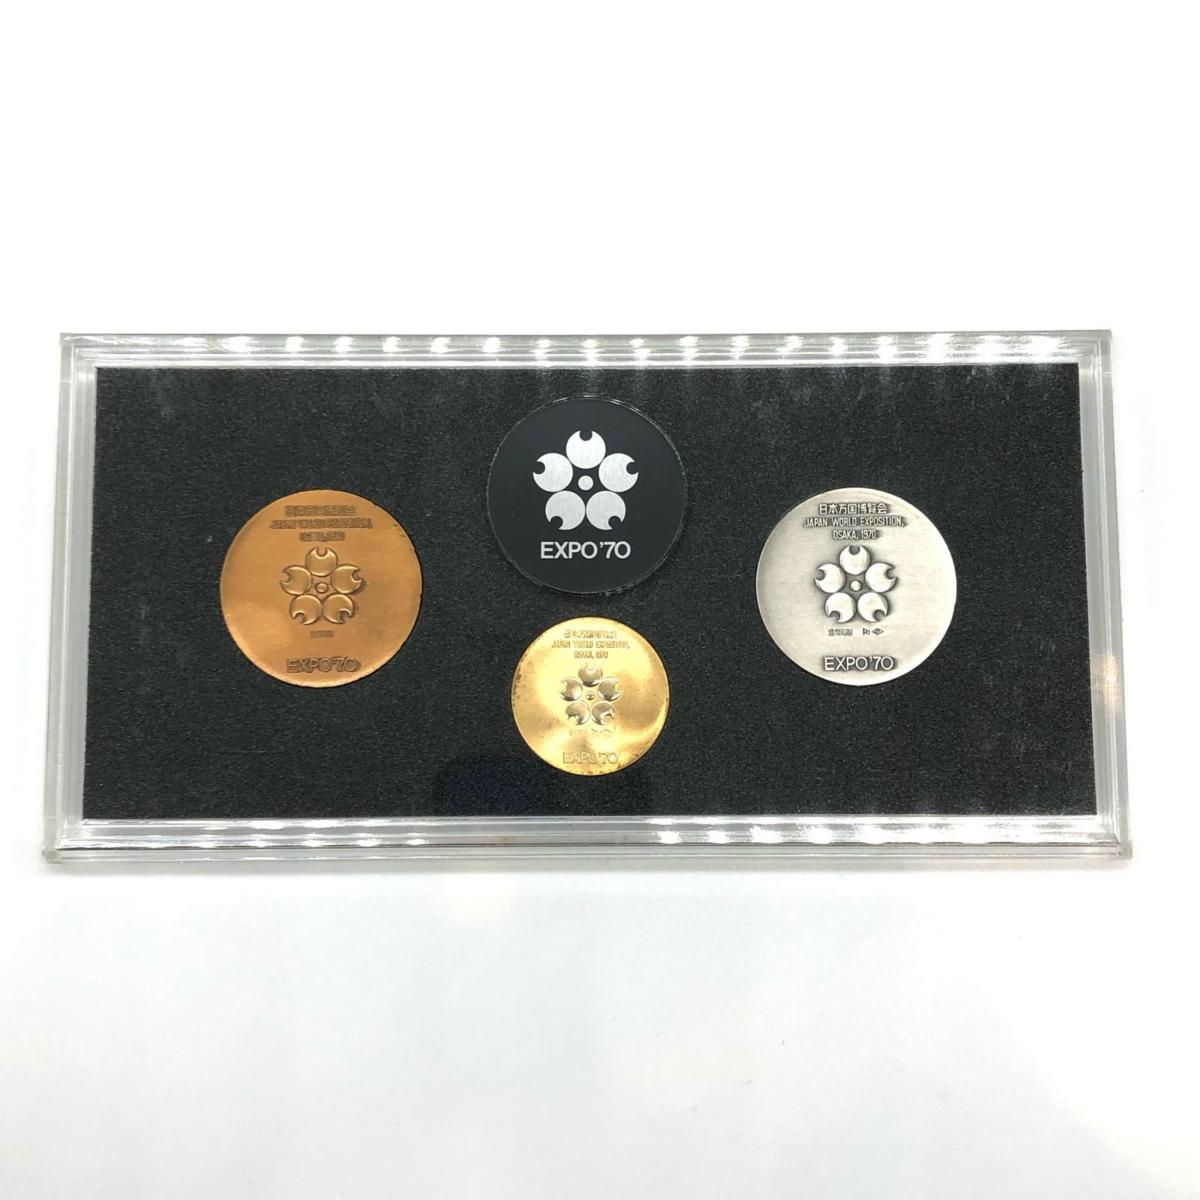 EXPO70 日本万国博覧会記念メダル 金 銀 銅 3枚セット 大阪万博 1970年 コイン